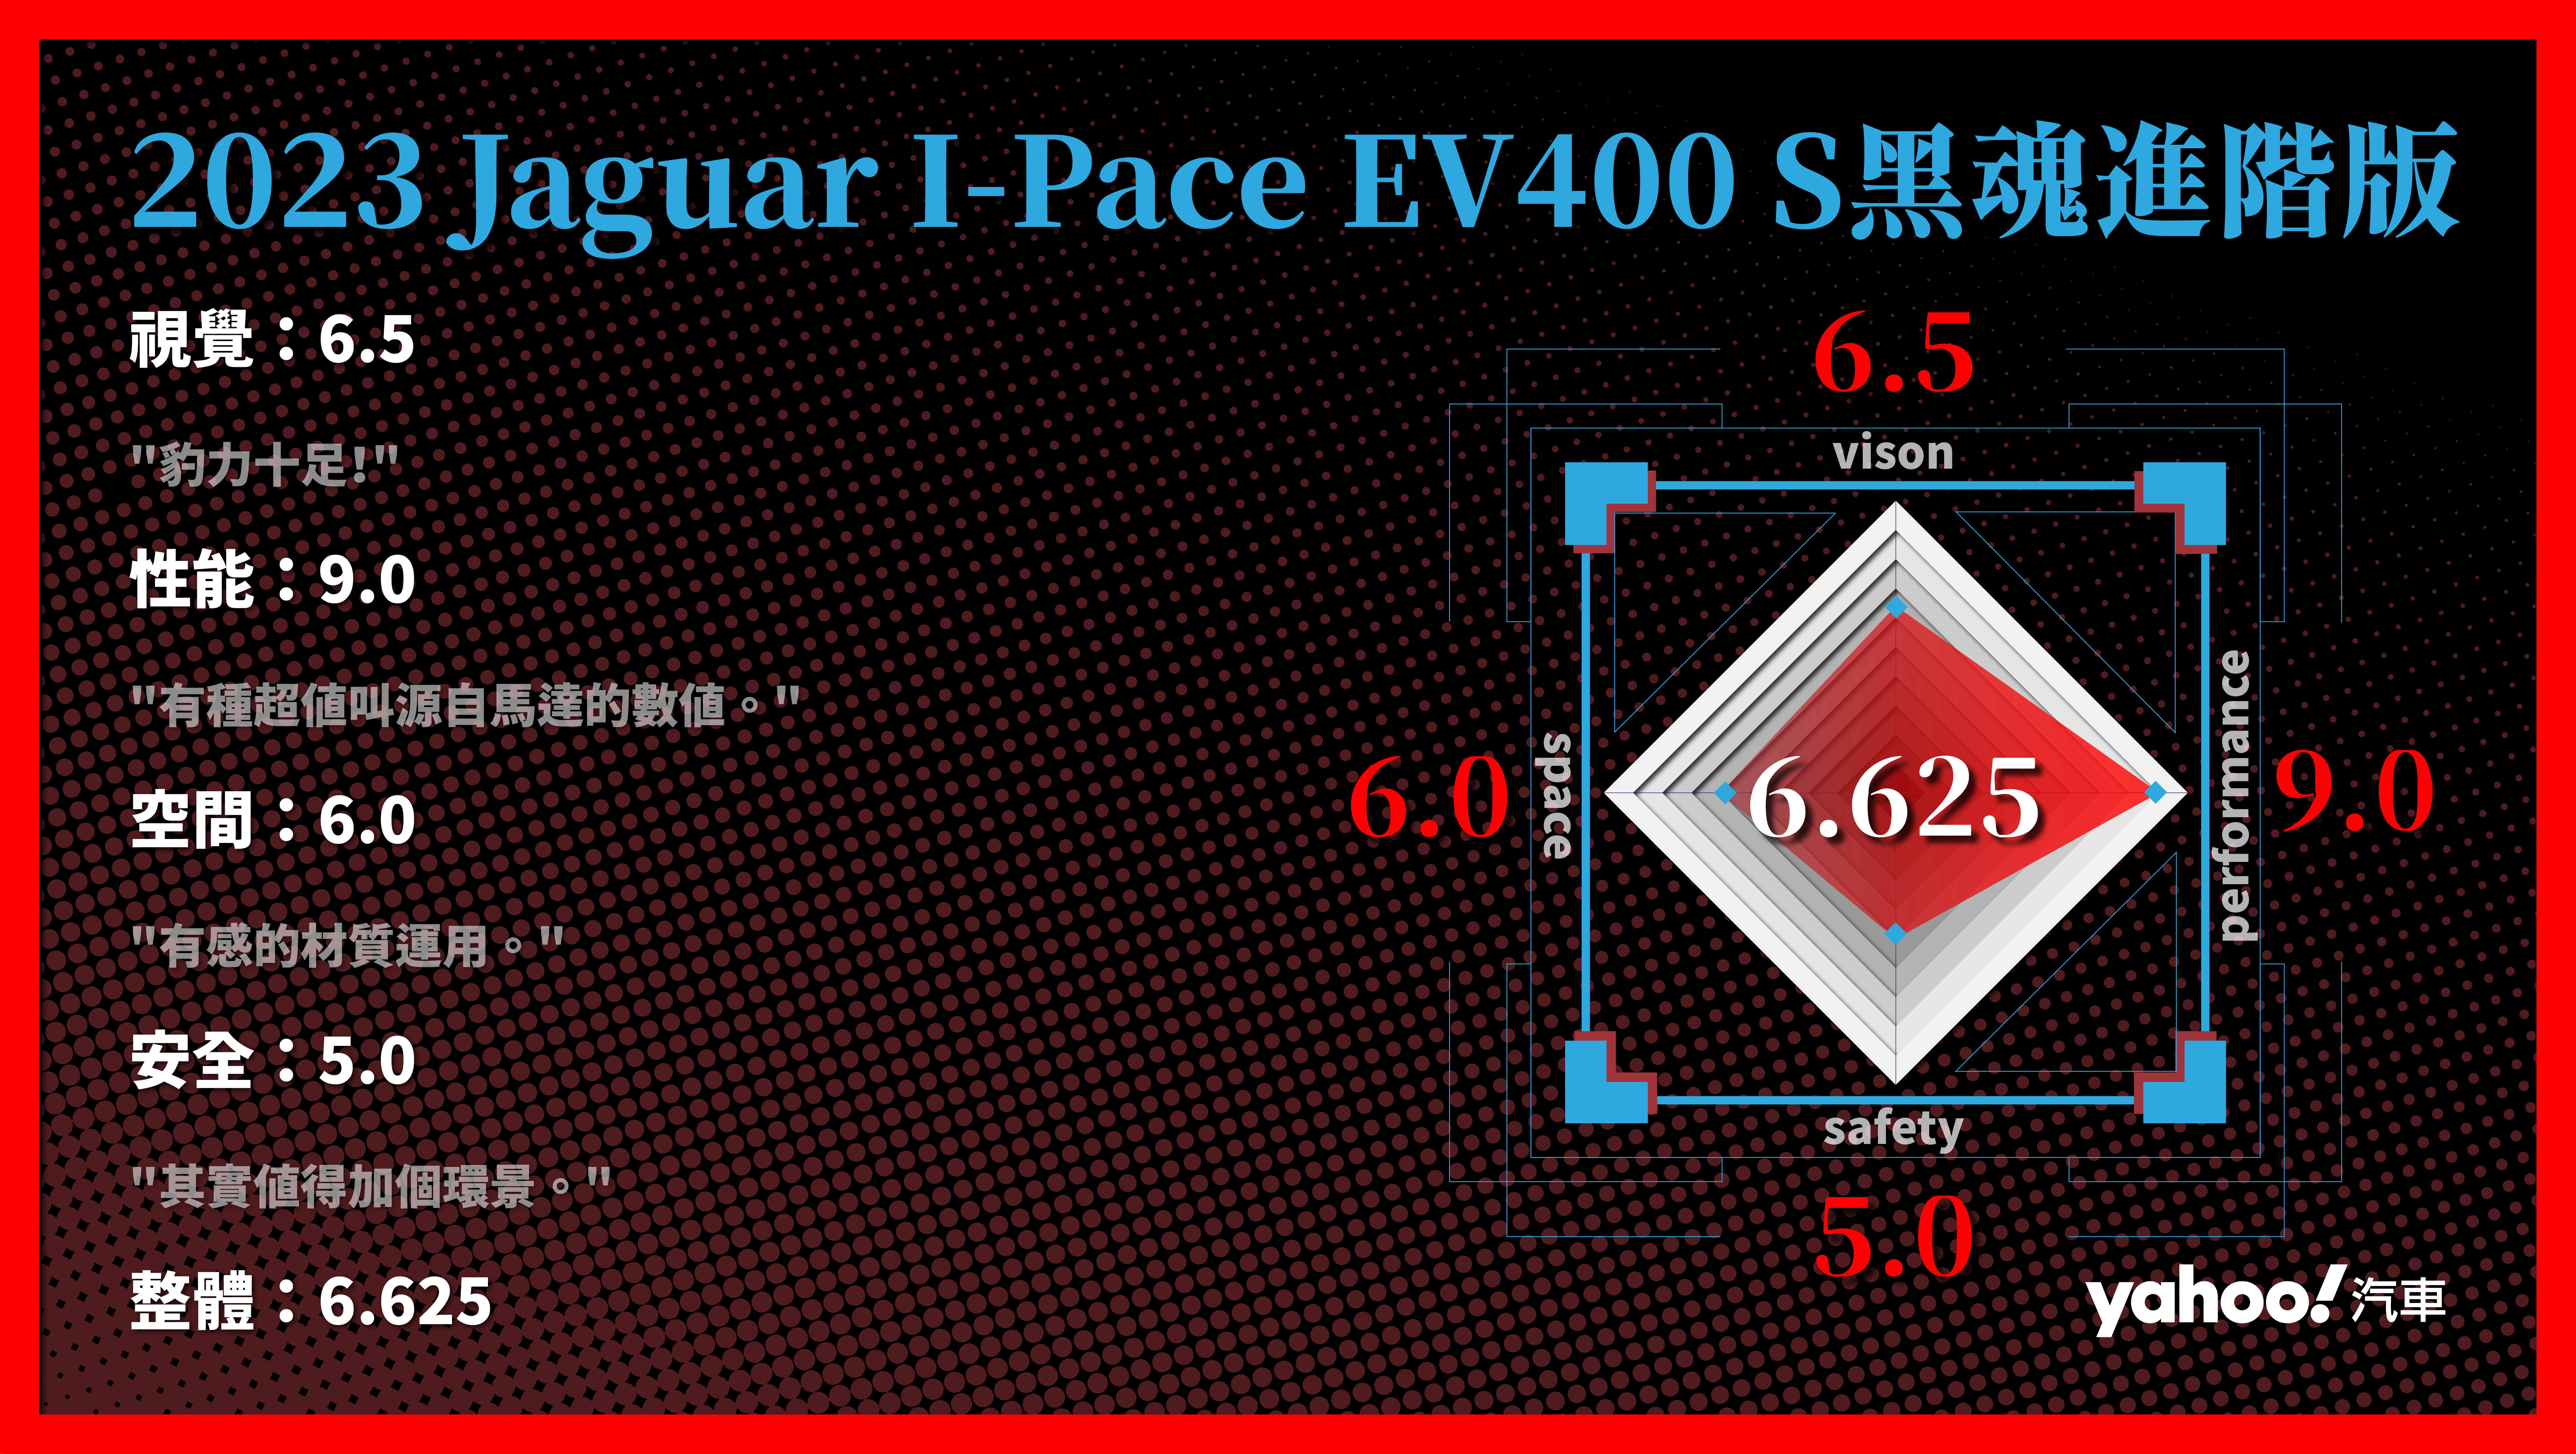 2023 Jaguar I-Pace EV400 S黑魂進階版 分項評比。